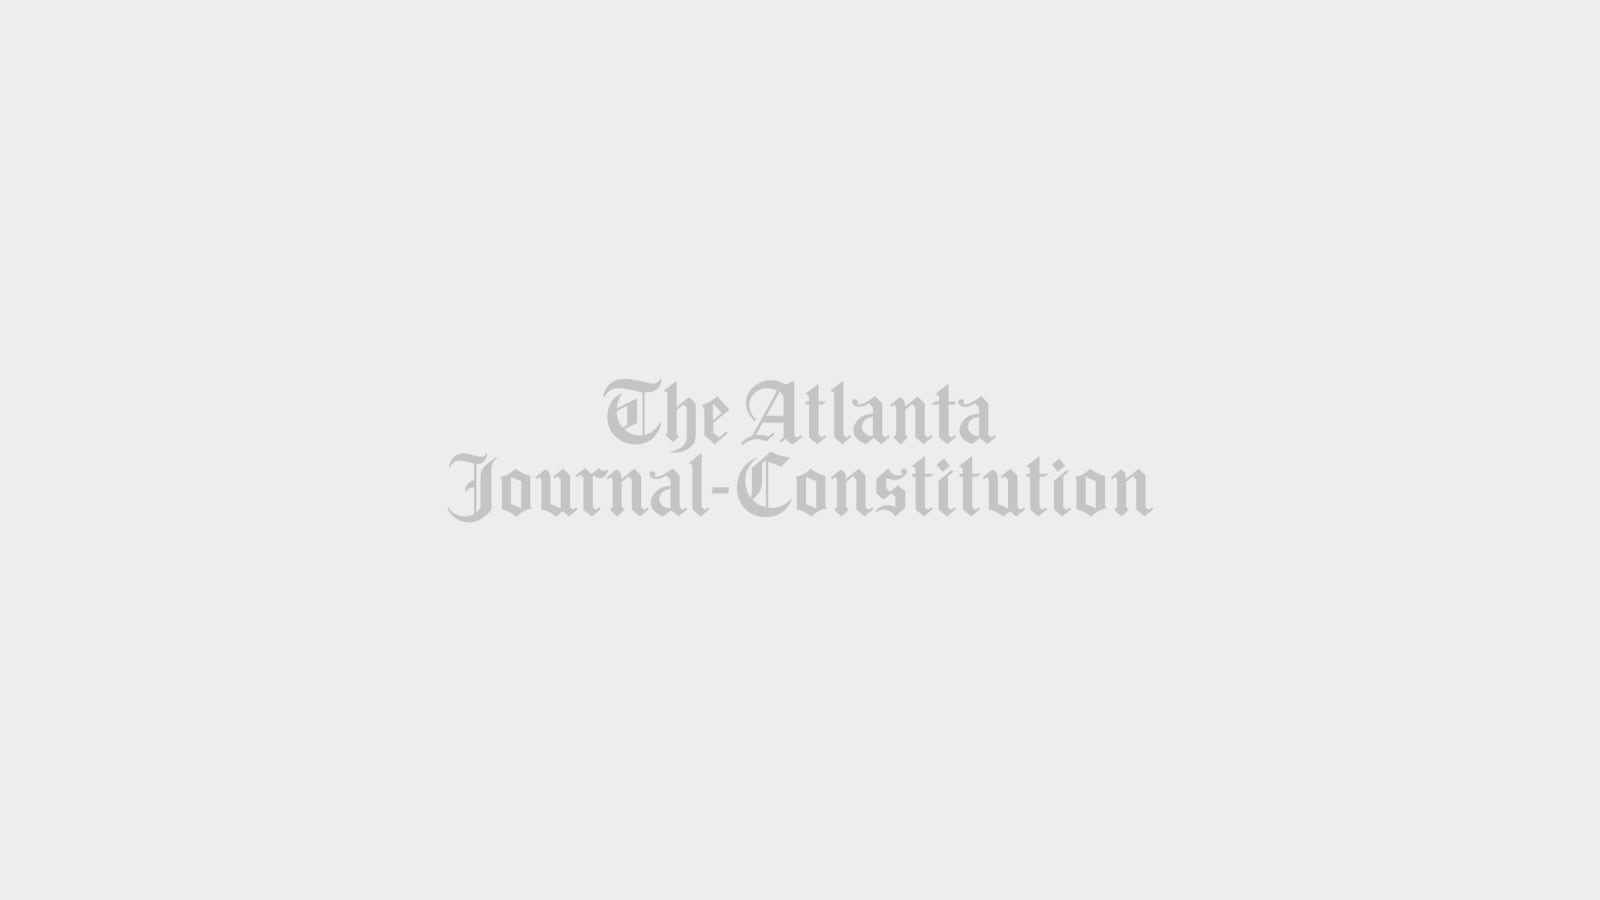 Photo illustration: The Atlanta Journal-Constitution